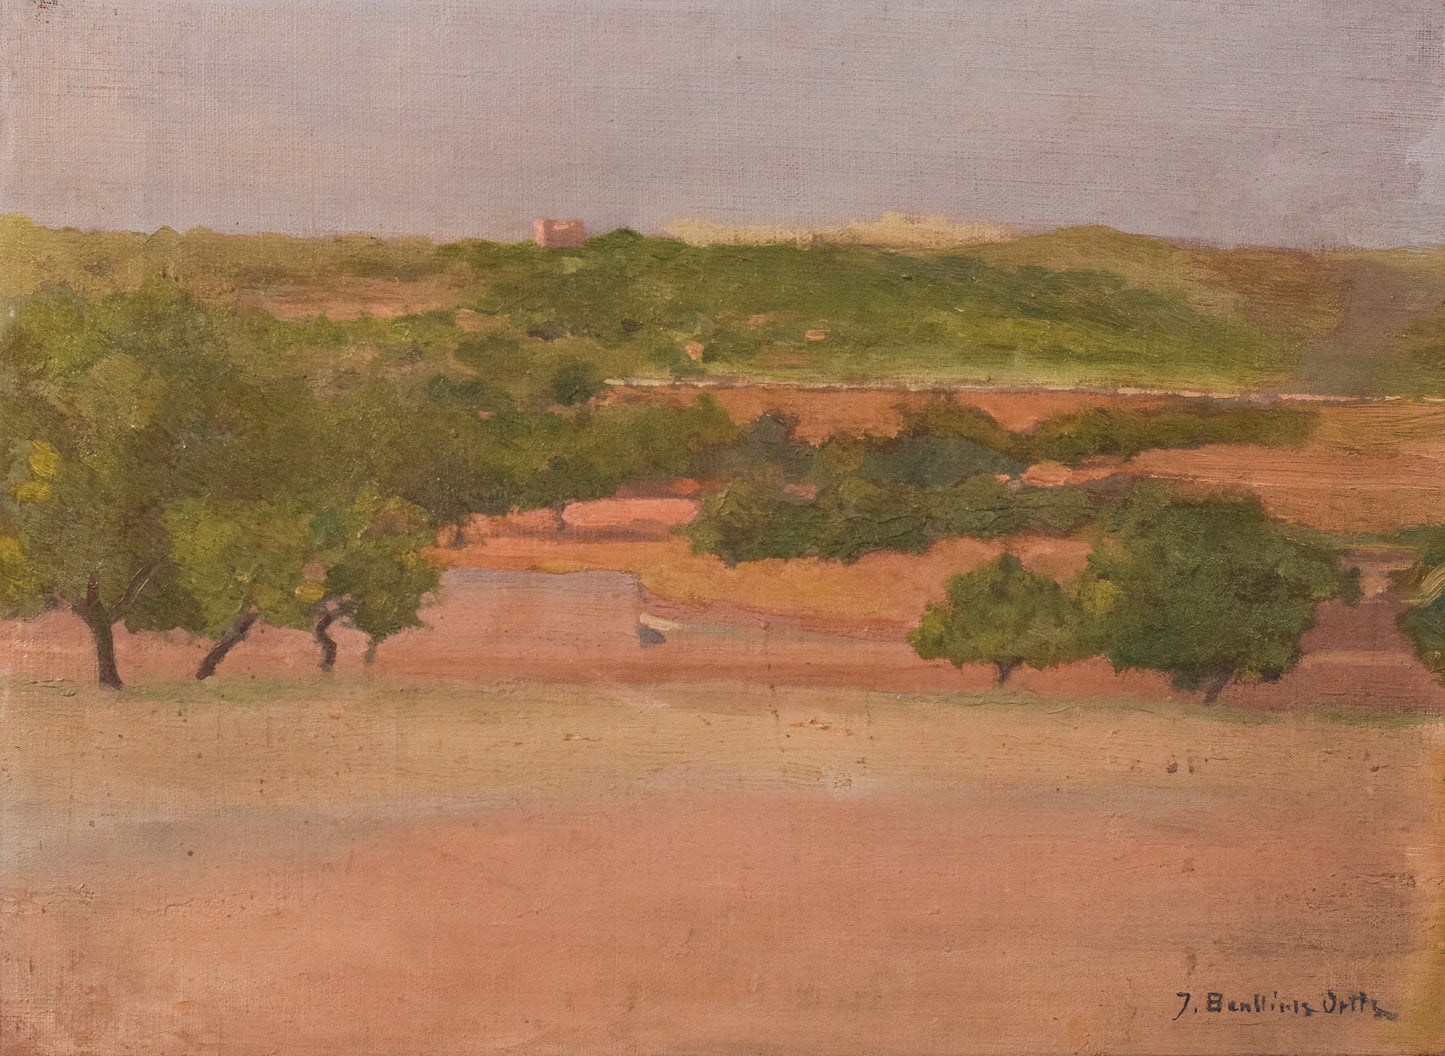 Jose Benlliure y Ortiz - Impressionist Mediterranean Landscape